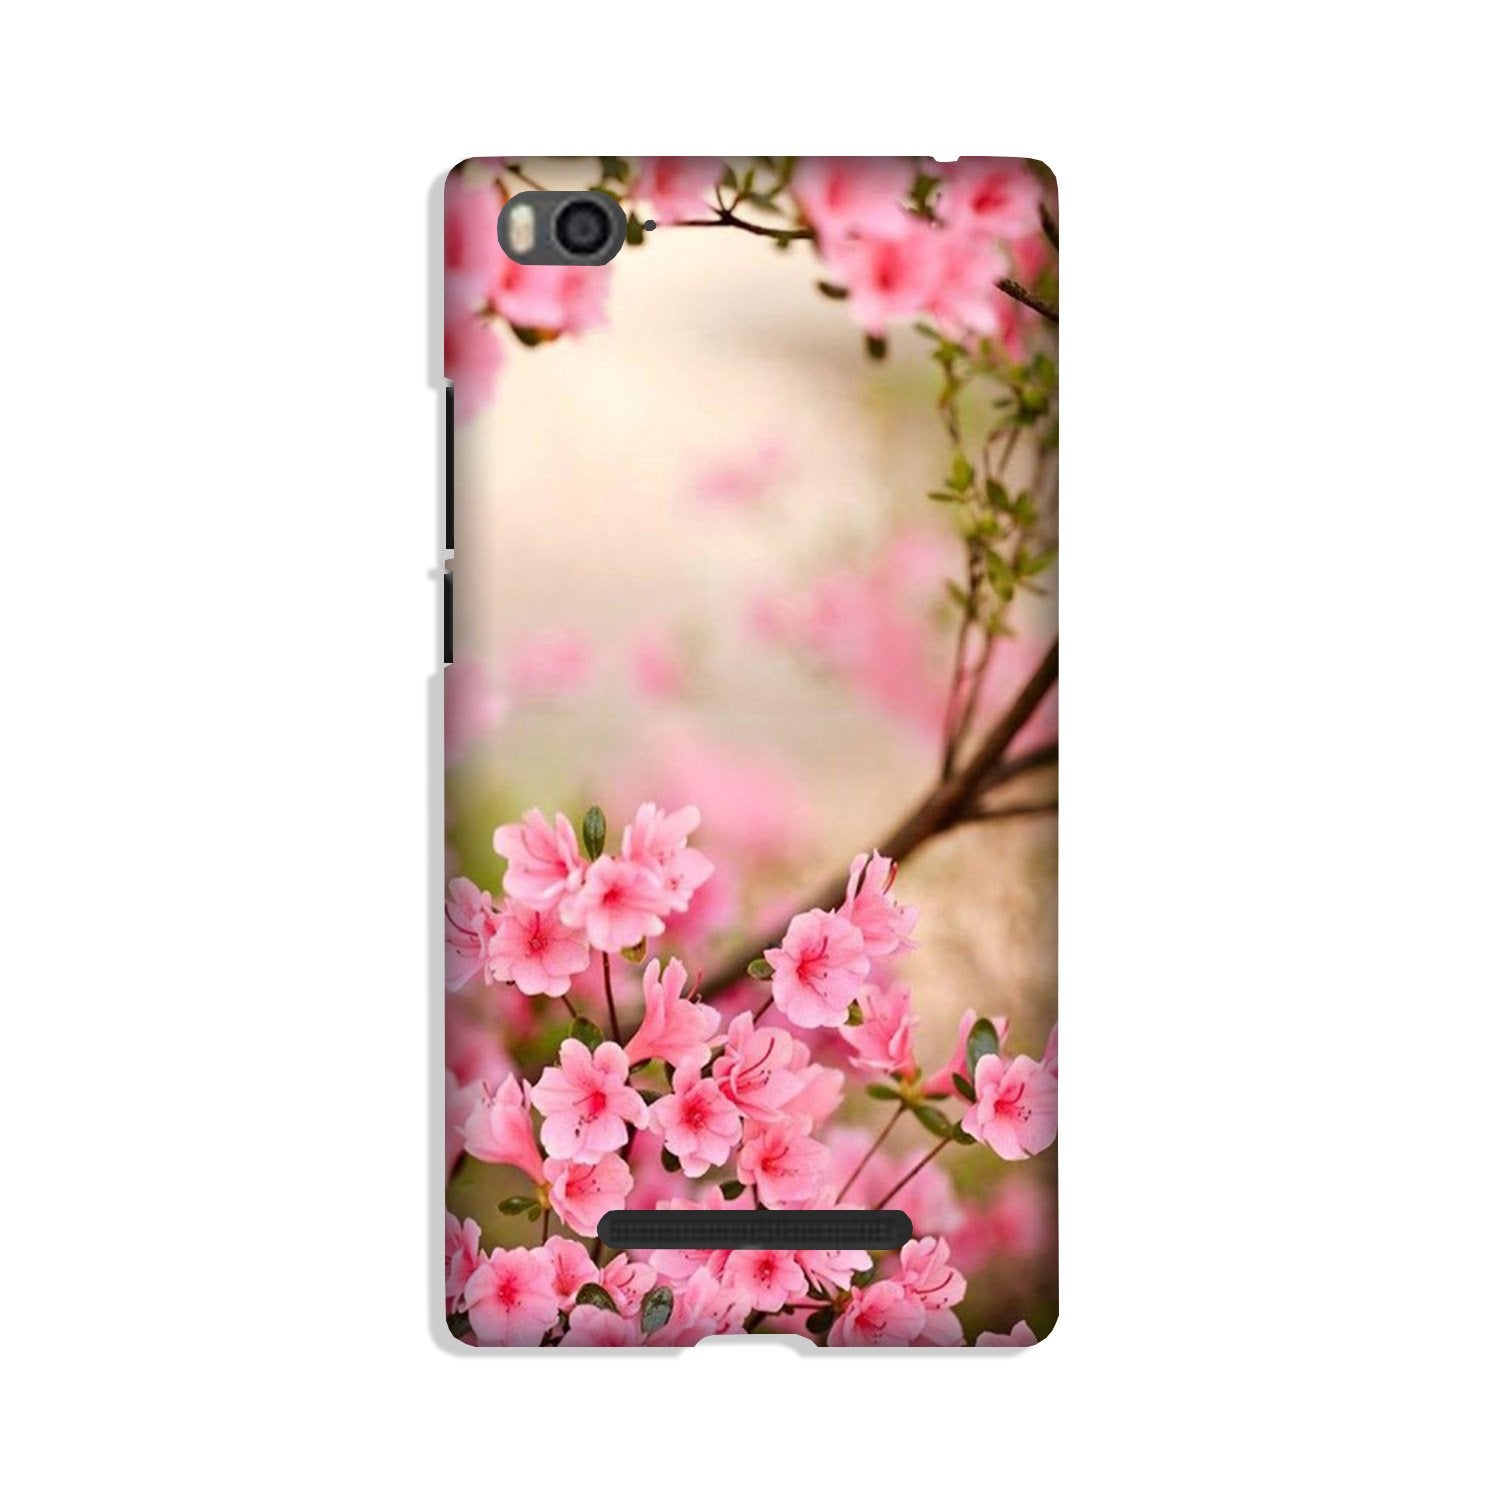 Pink flowers Case for Xiaomi Mi 4i